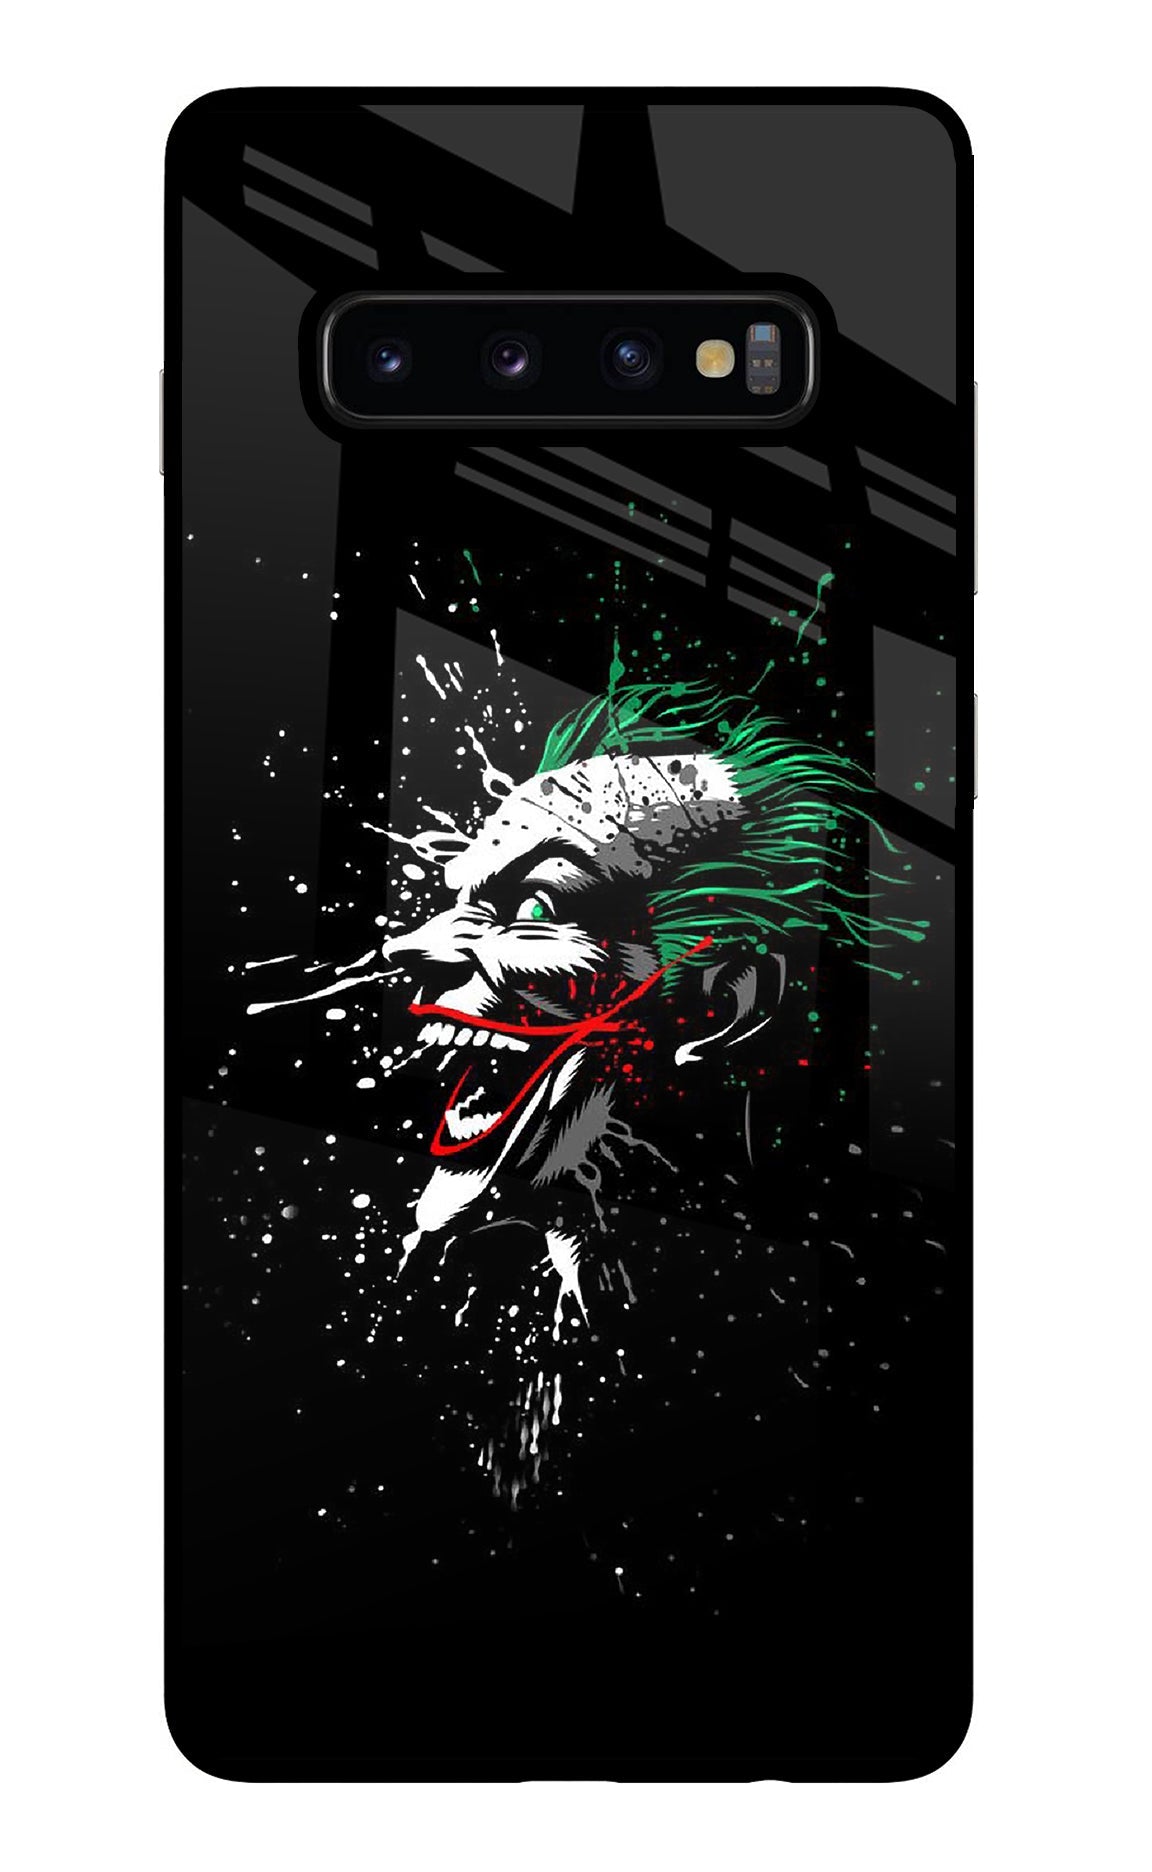 Joker Samsung S10 Plus Glass Case